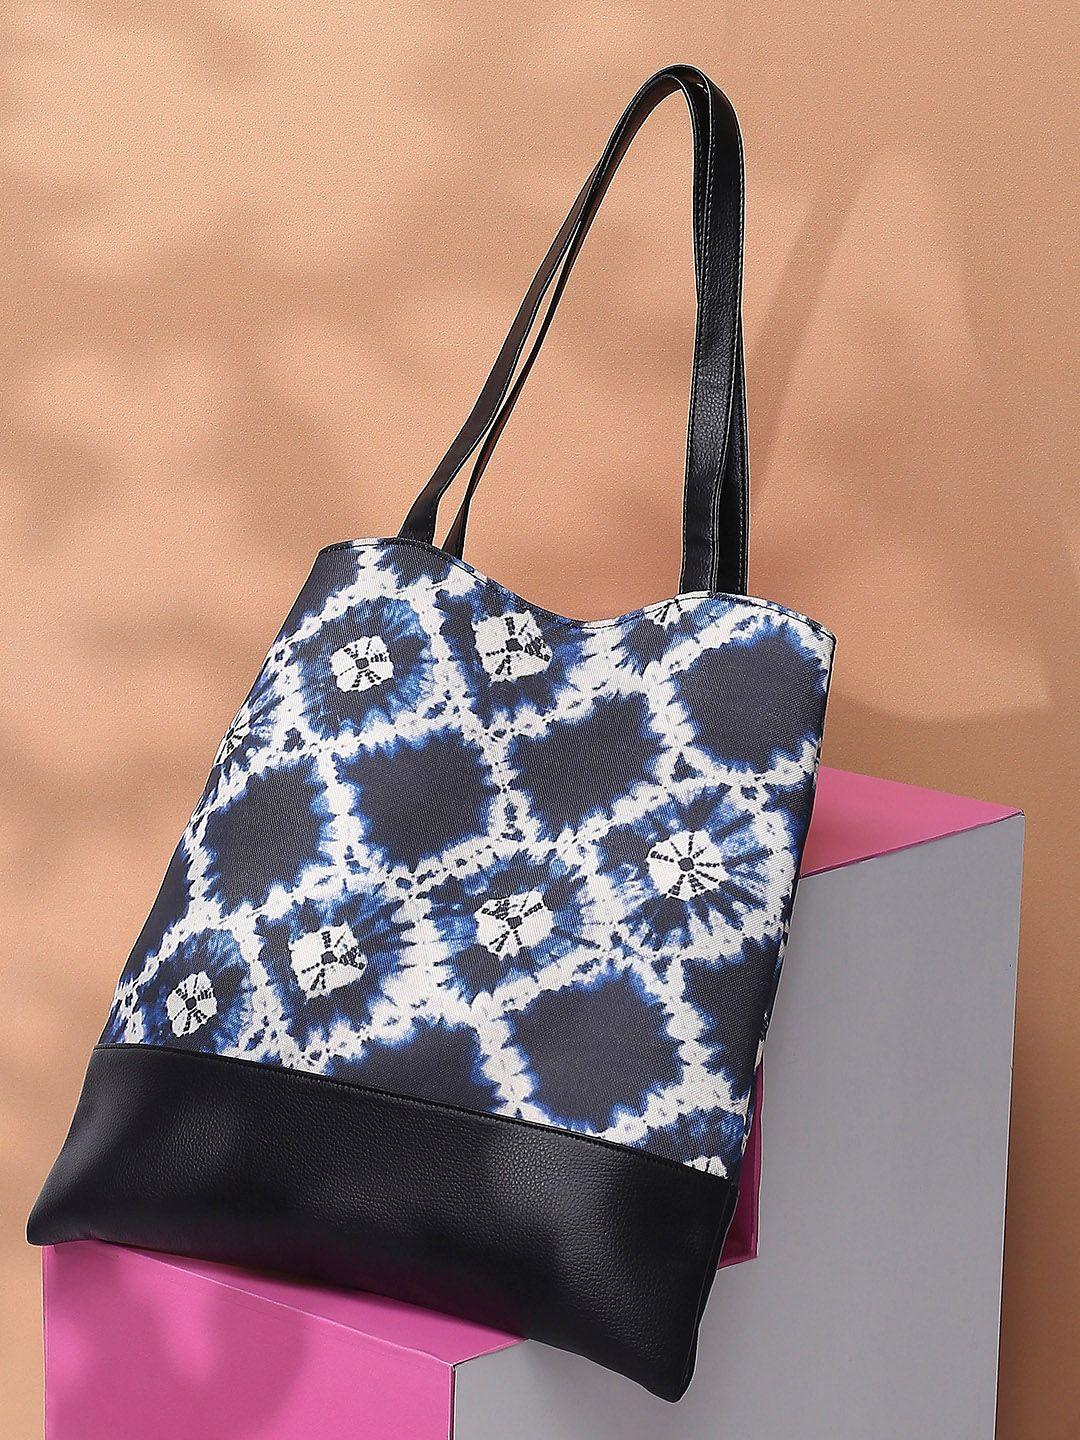 anouk black printed 12 inch laptop shopper tote bag